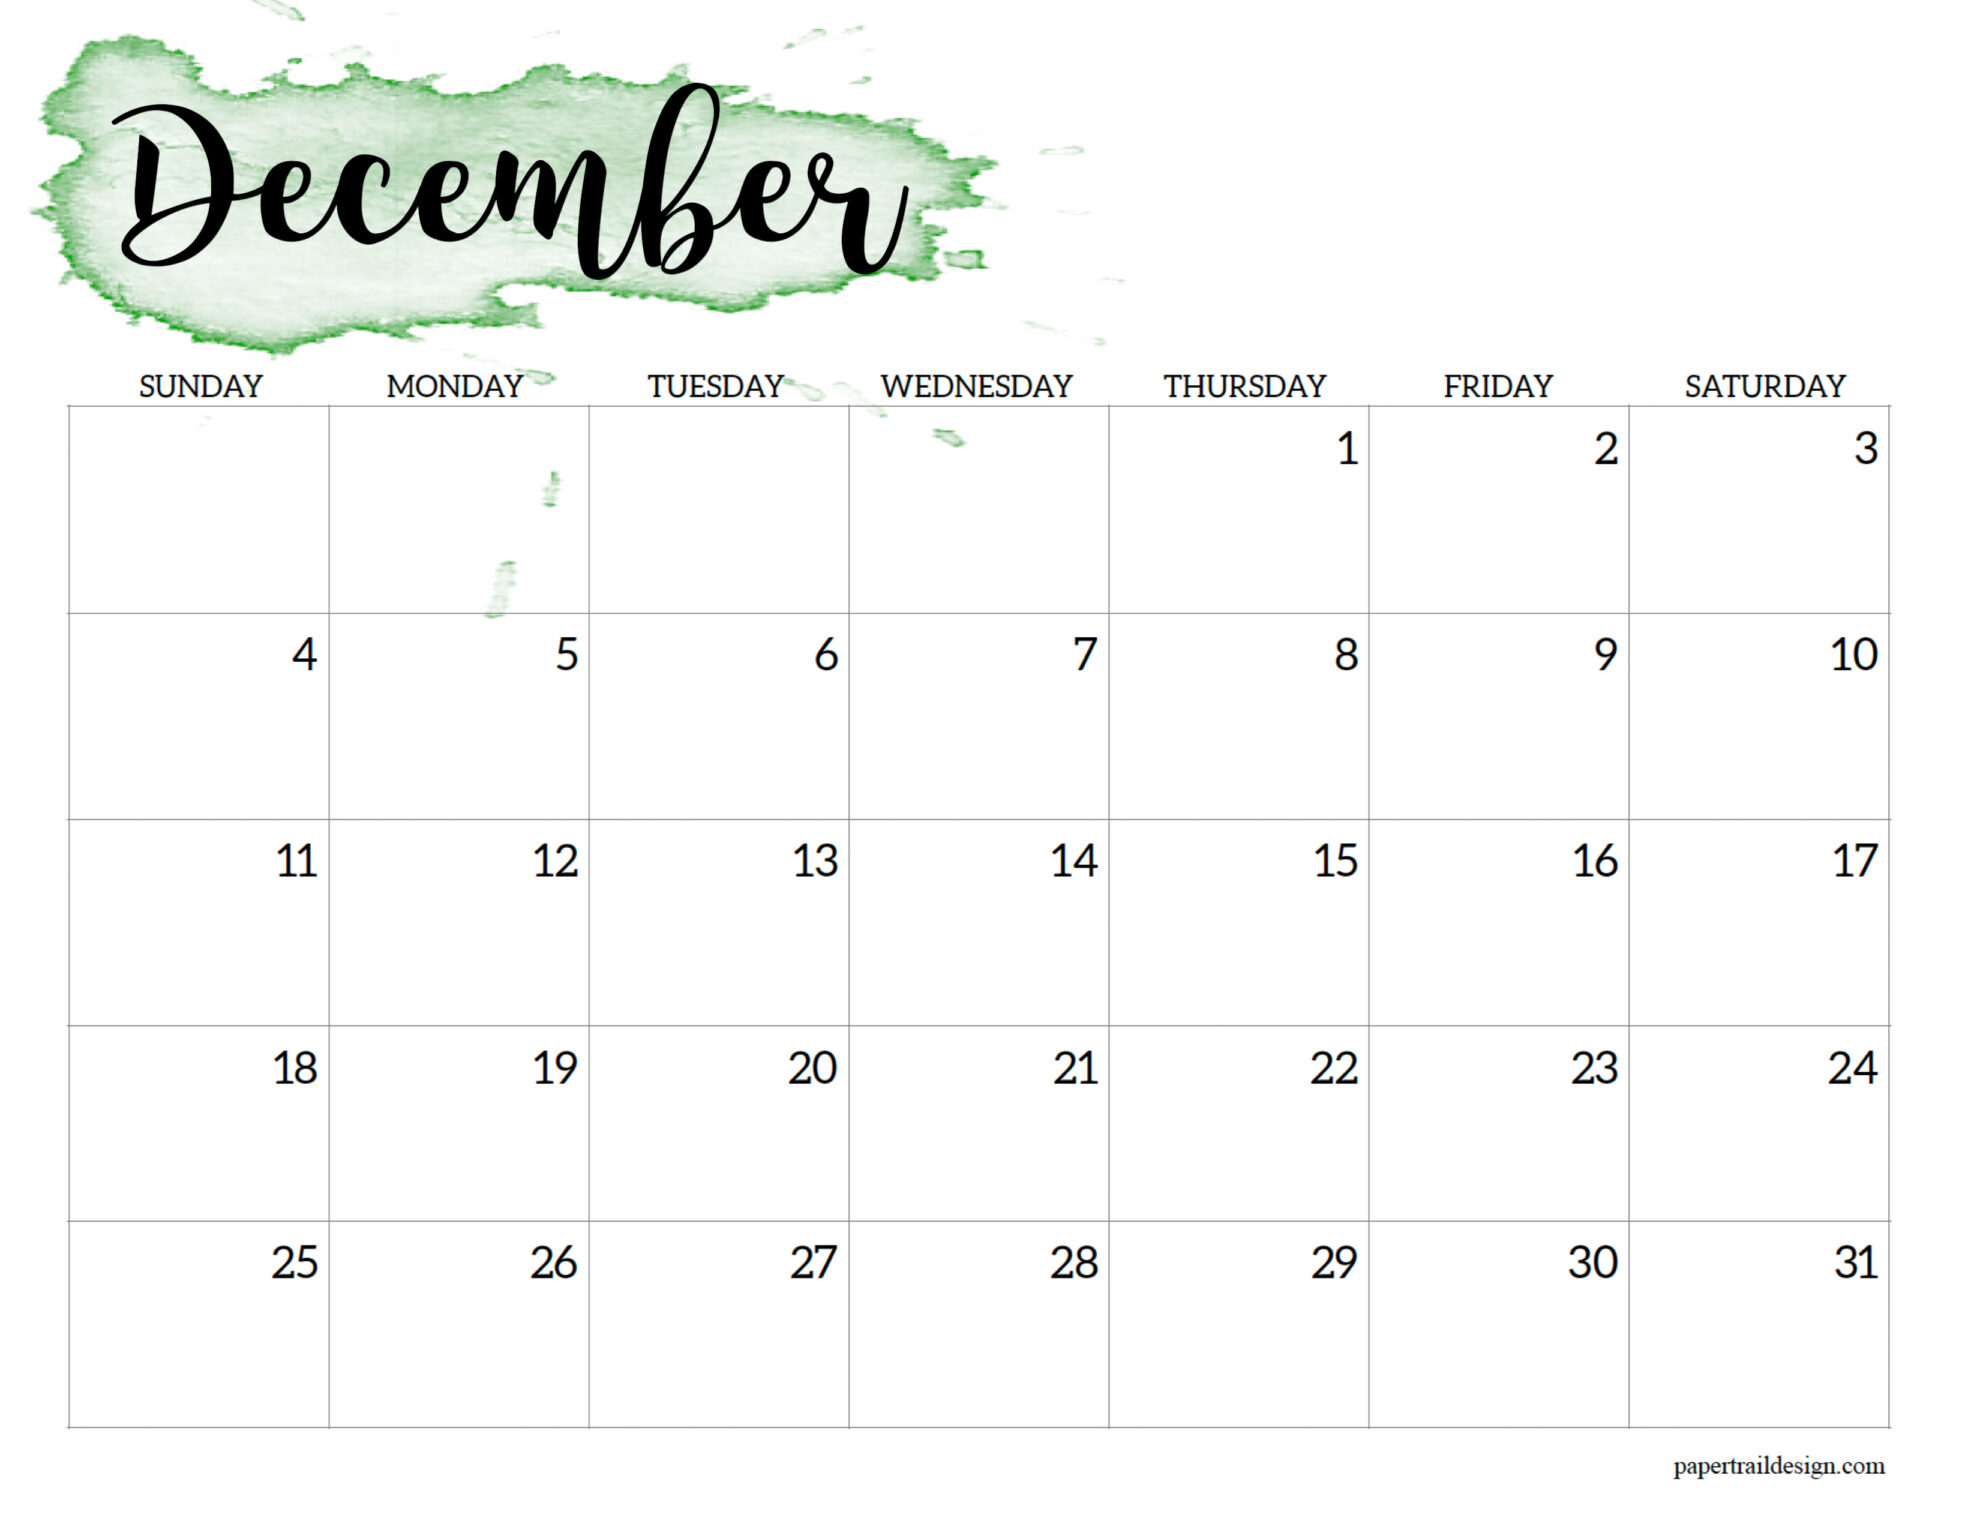 Dec 2022 Calendar Printable 2022 Calendar Printable - Watercolor - Paper Trail Design